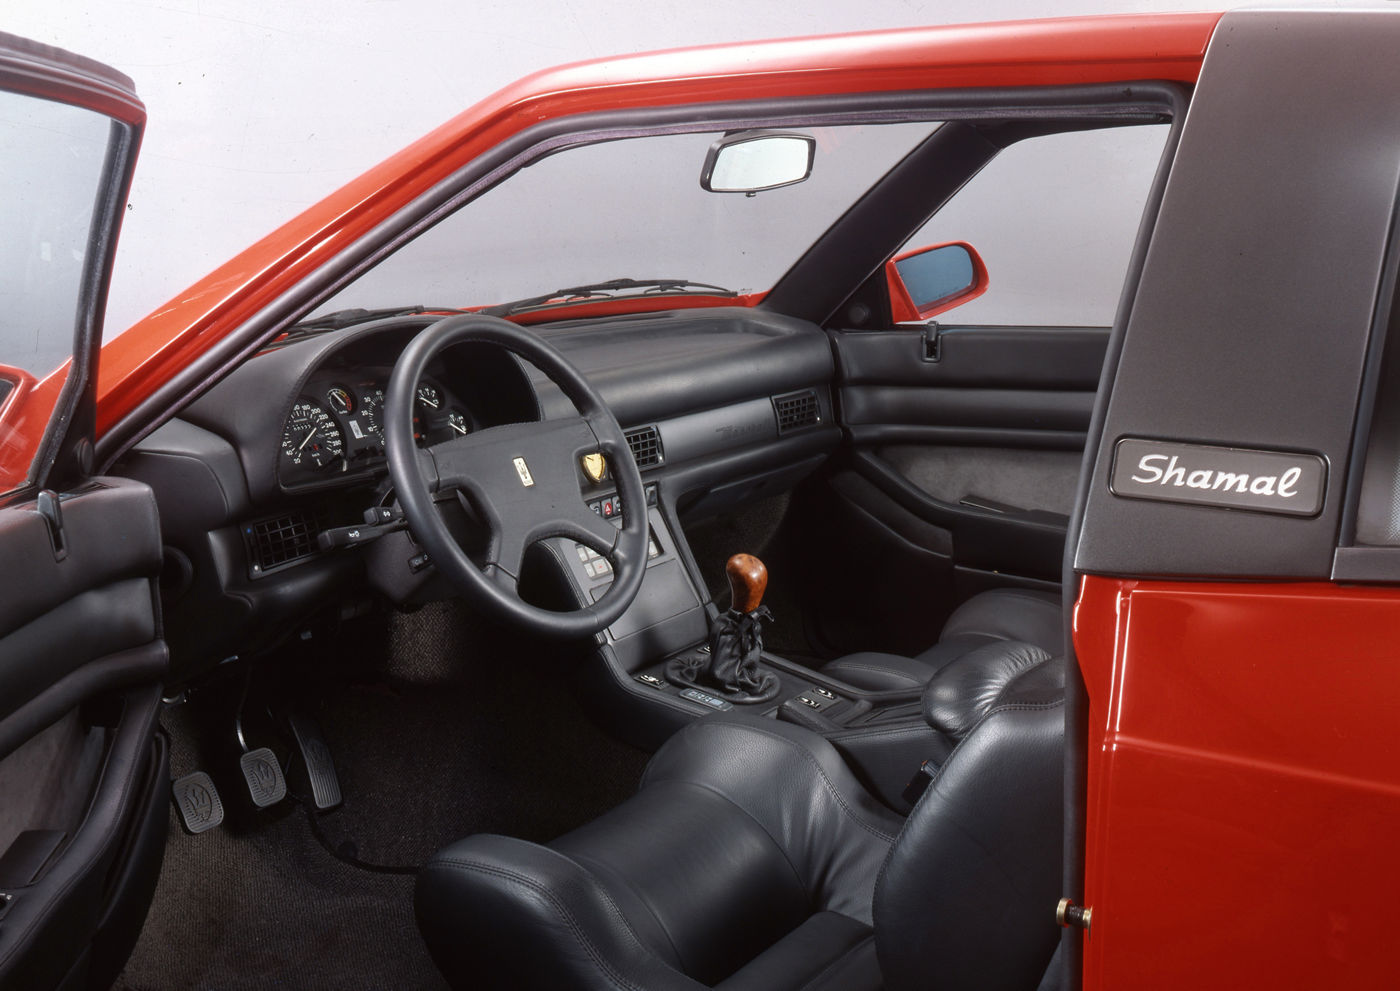 Maserati Classic - Biturbo Shamal - carrosserie rouge - vue latérale - design intérieur